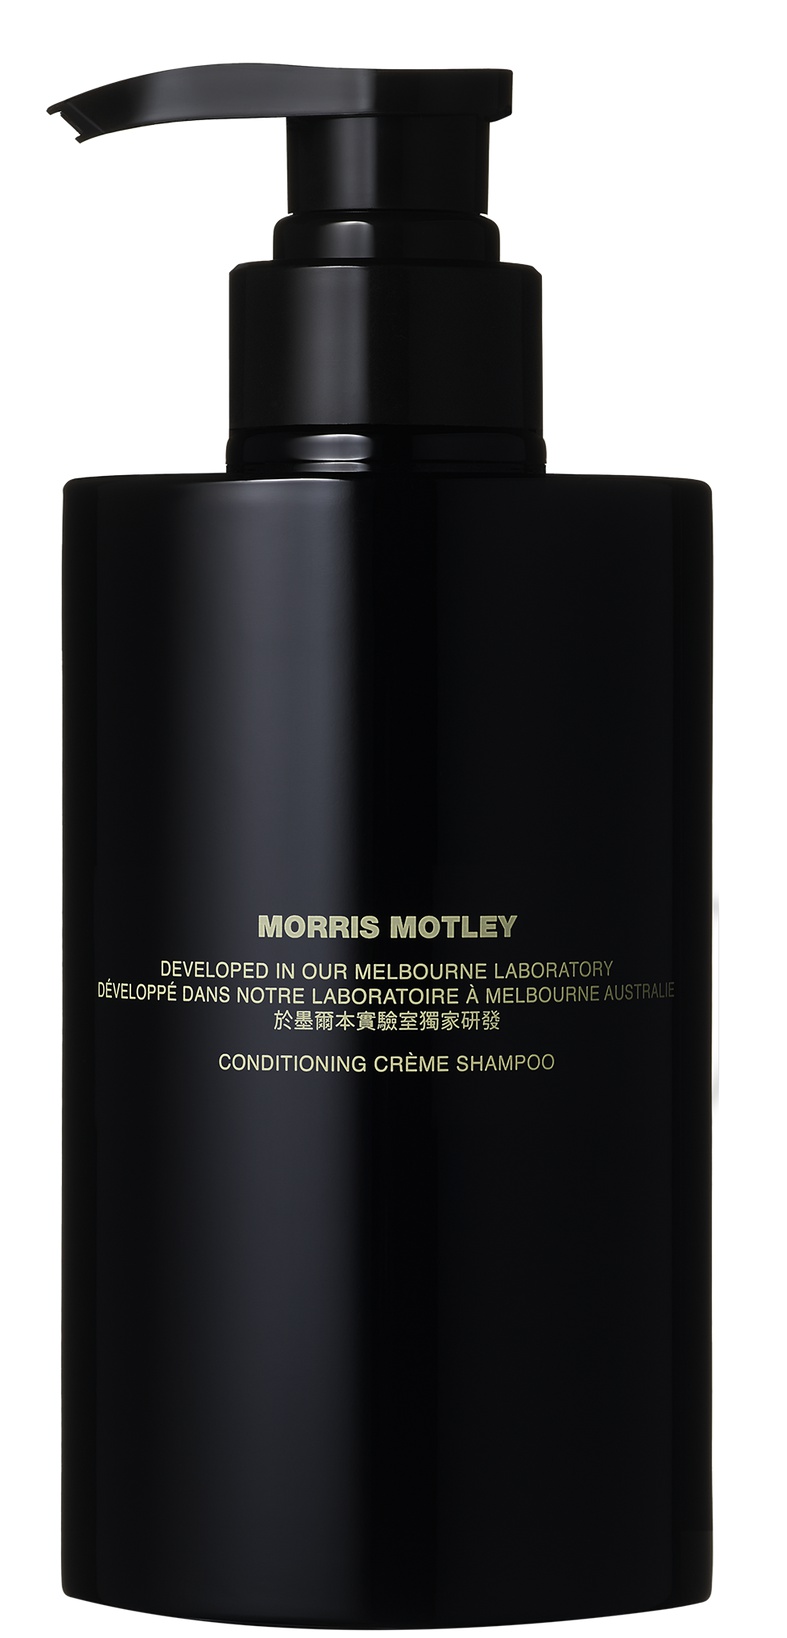 Morris Motley Conditioning Creme Shampoo